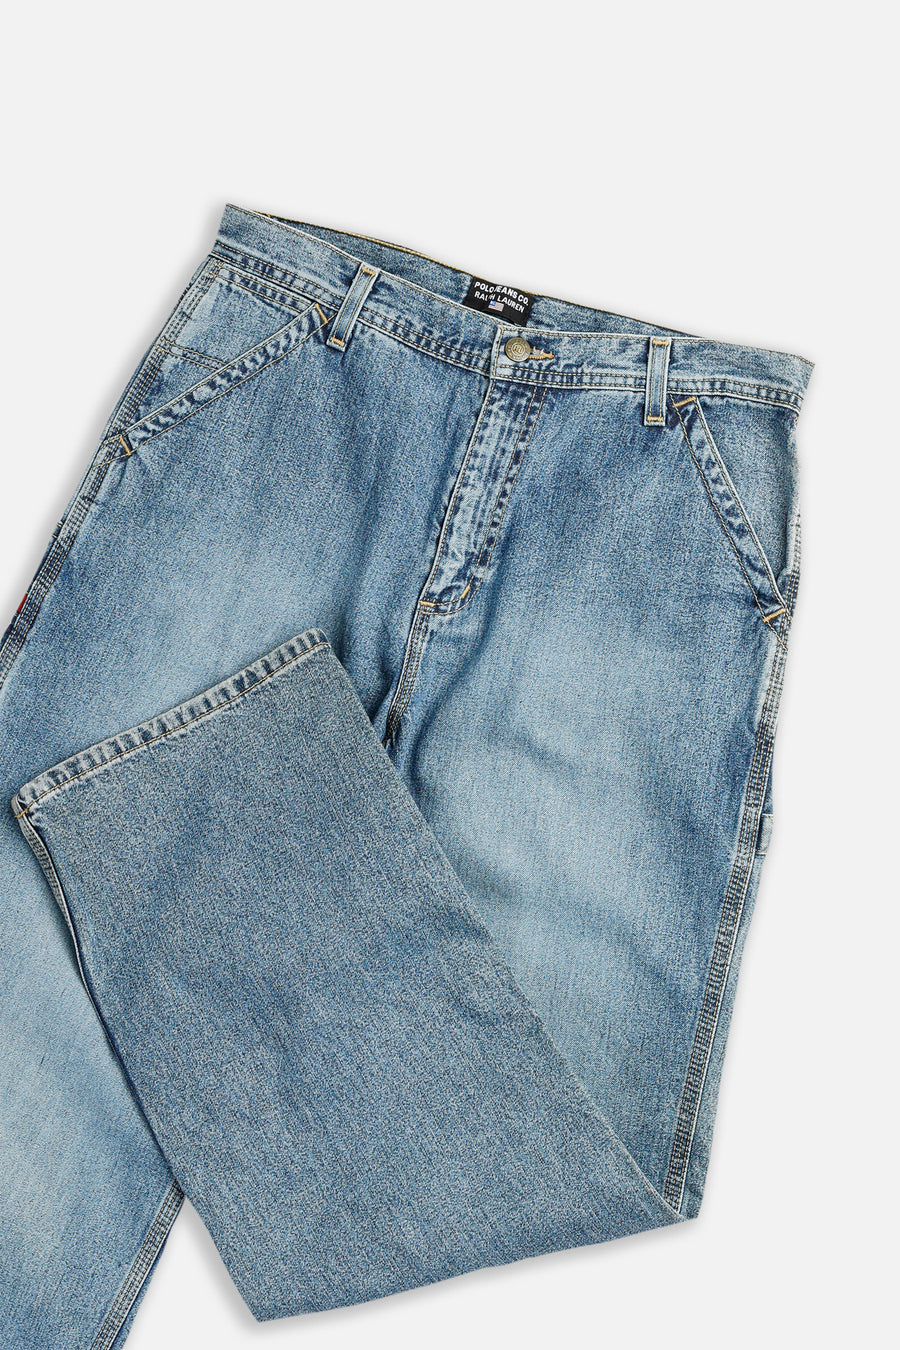 Vintage Denim Pants - W32